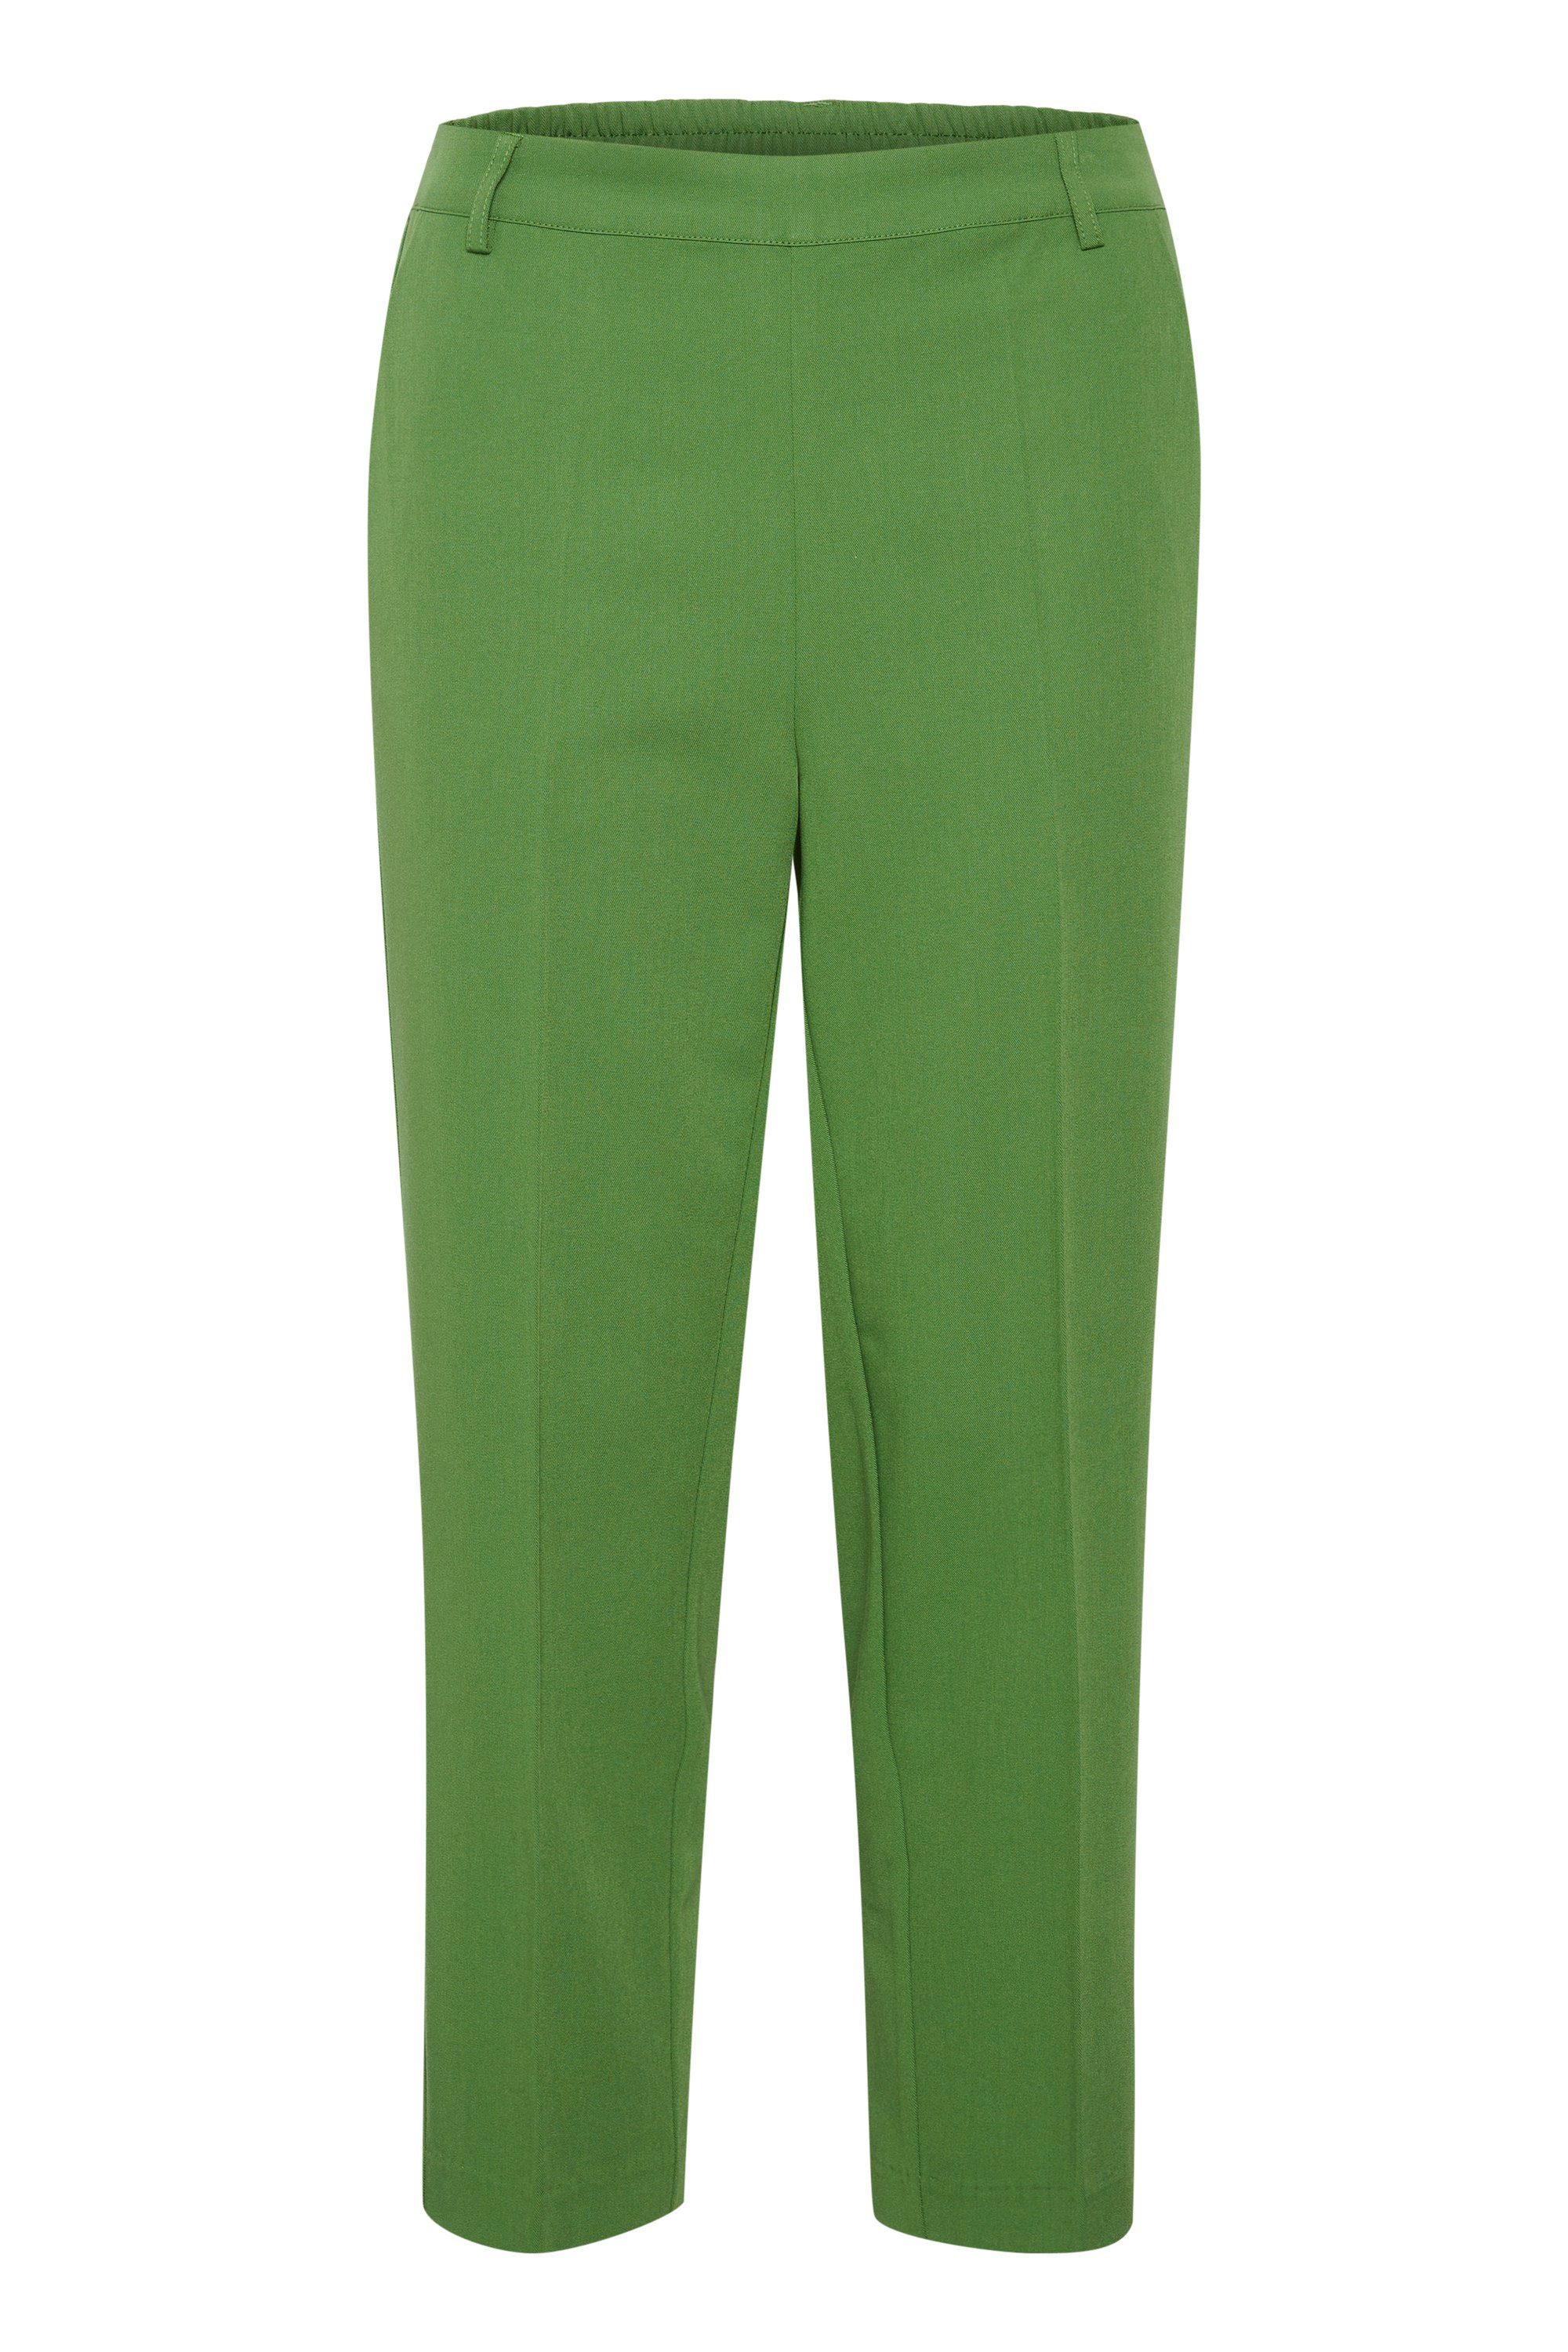 KAFFE KAsakura Suiting Green Anzughose Pants Artichoke